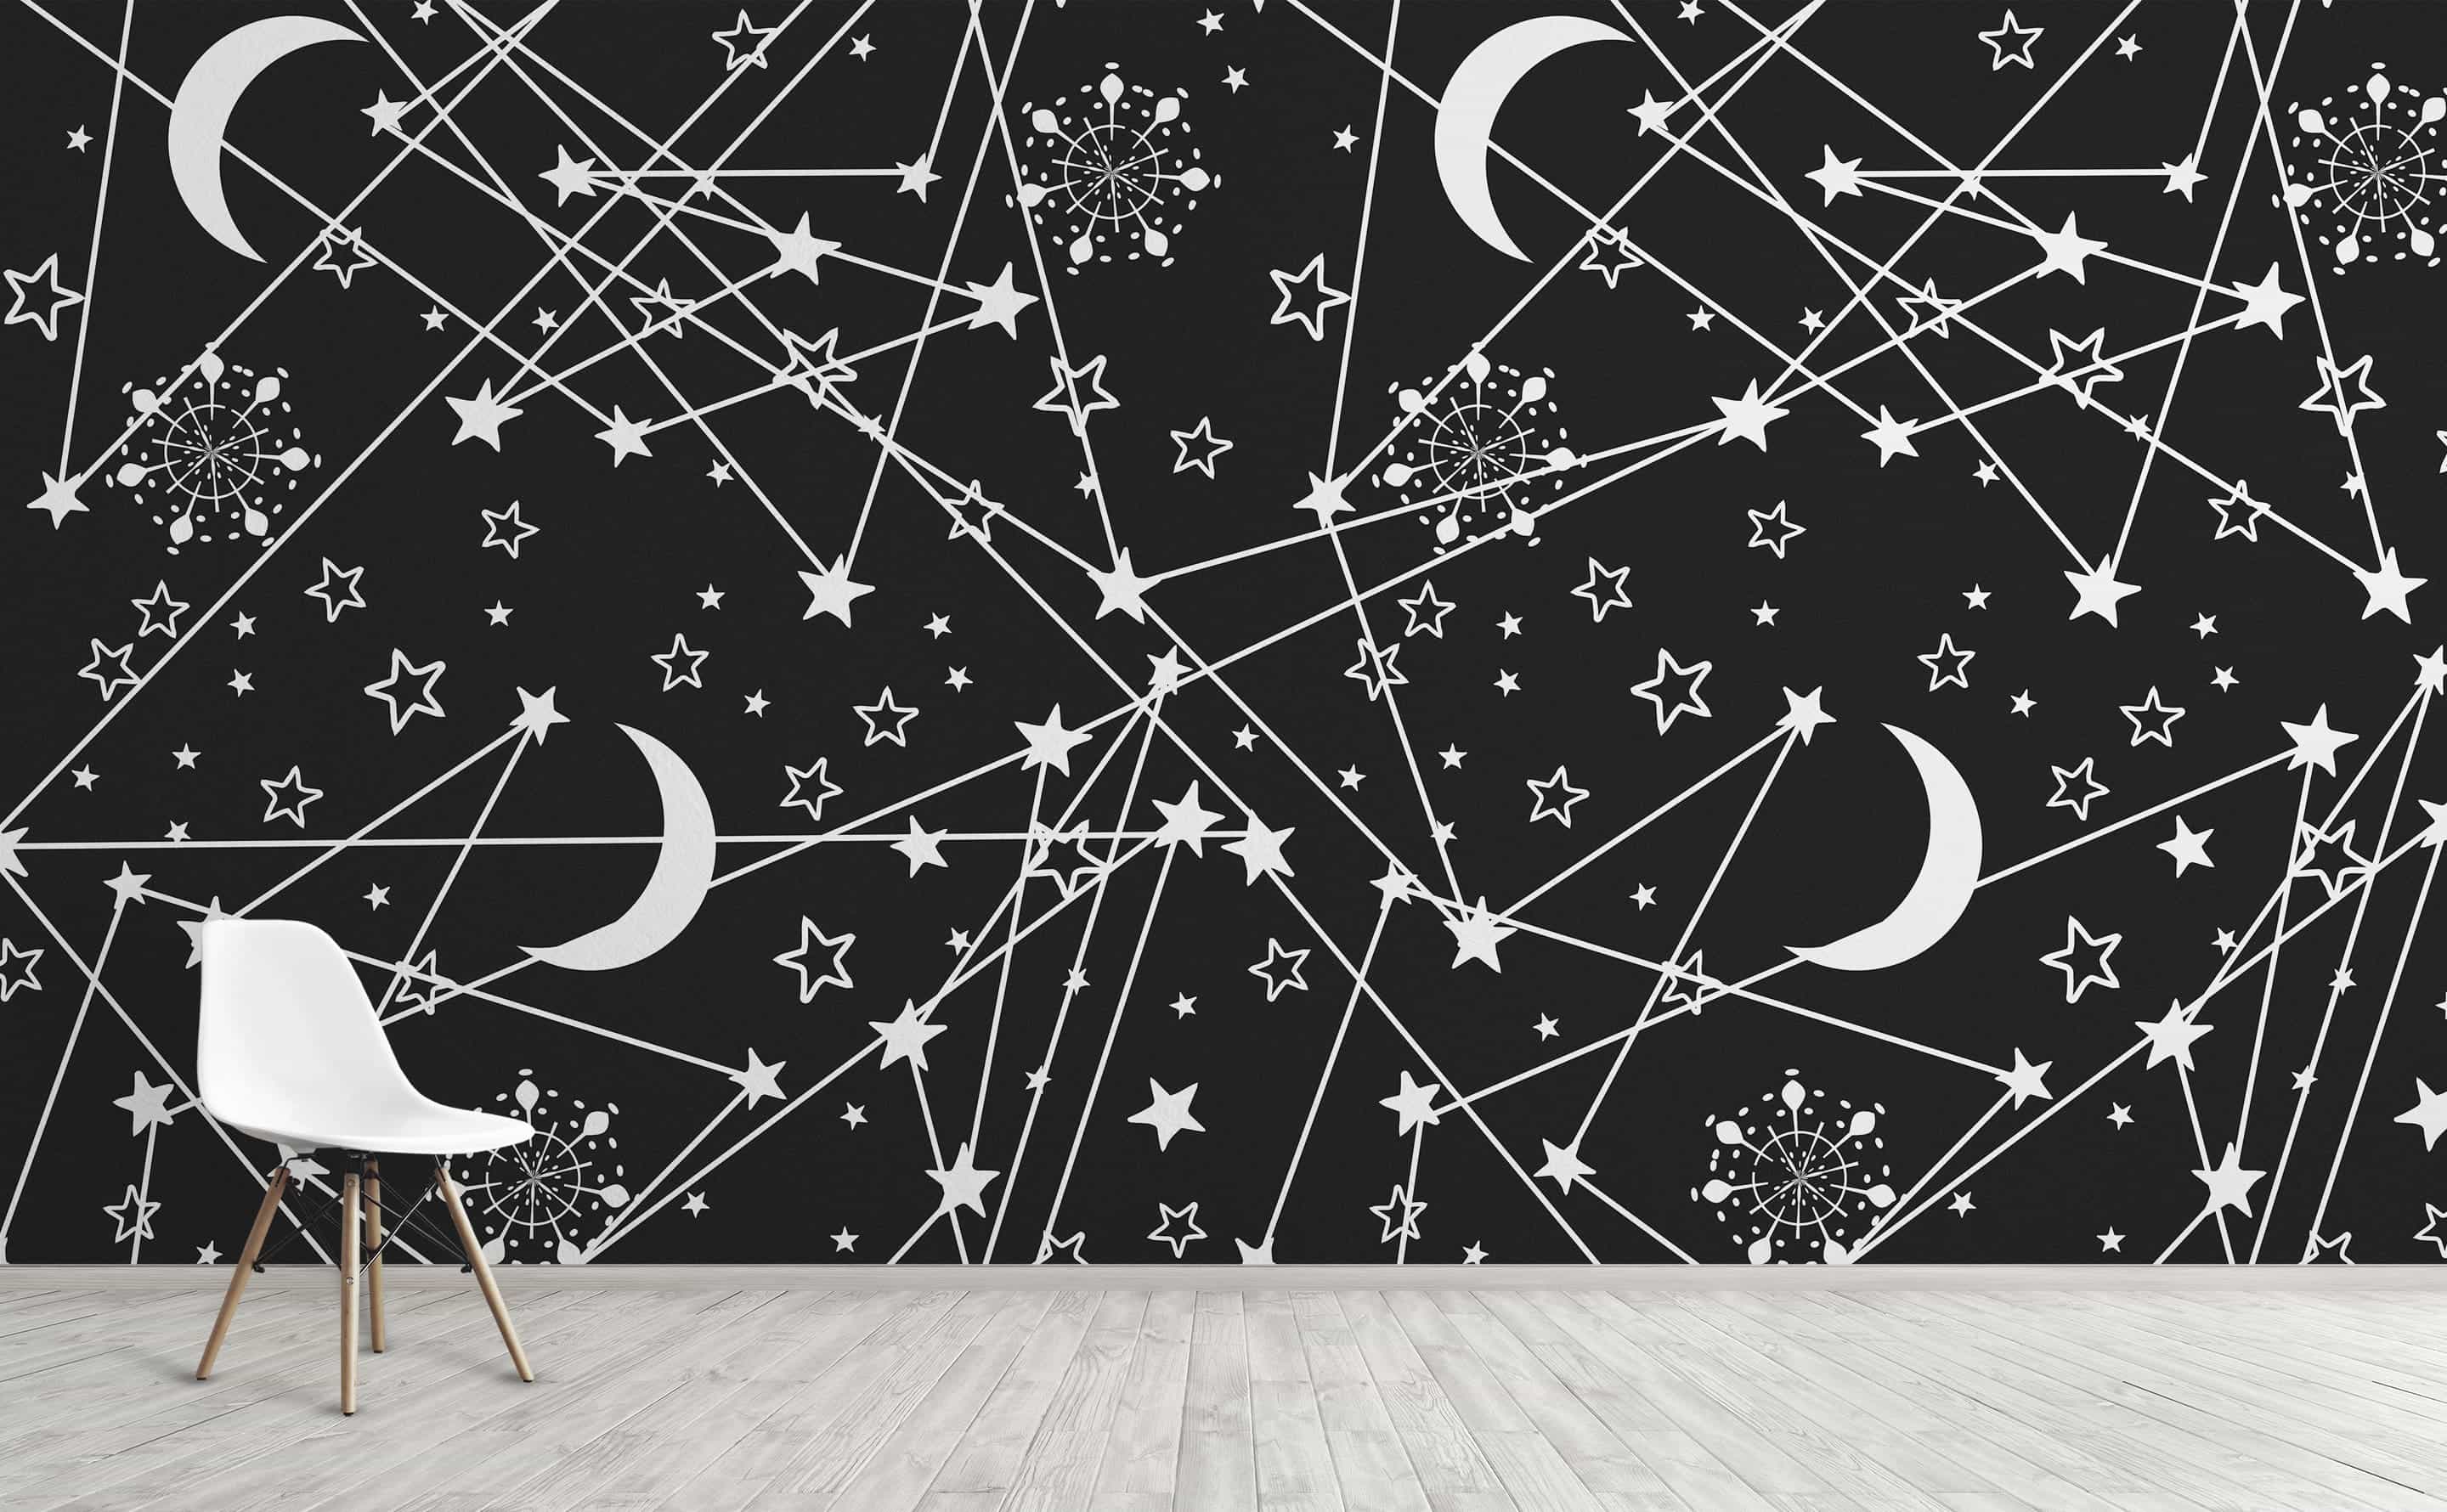 Galaxy Wall Wall Mural by Walls Need Love®